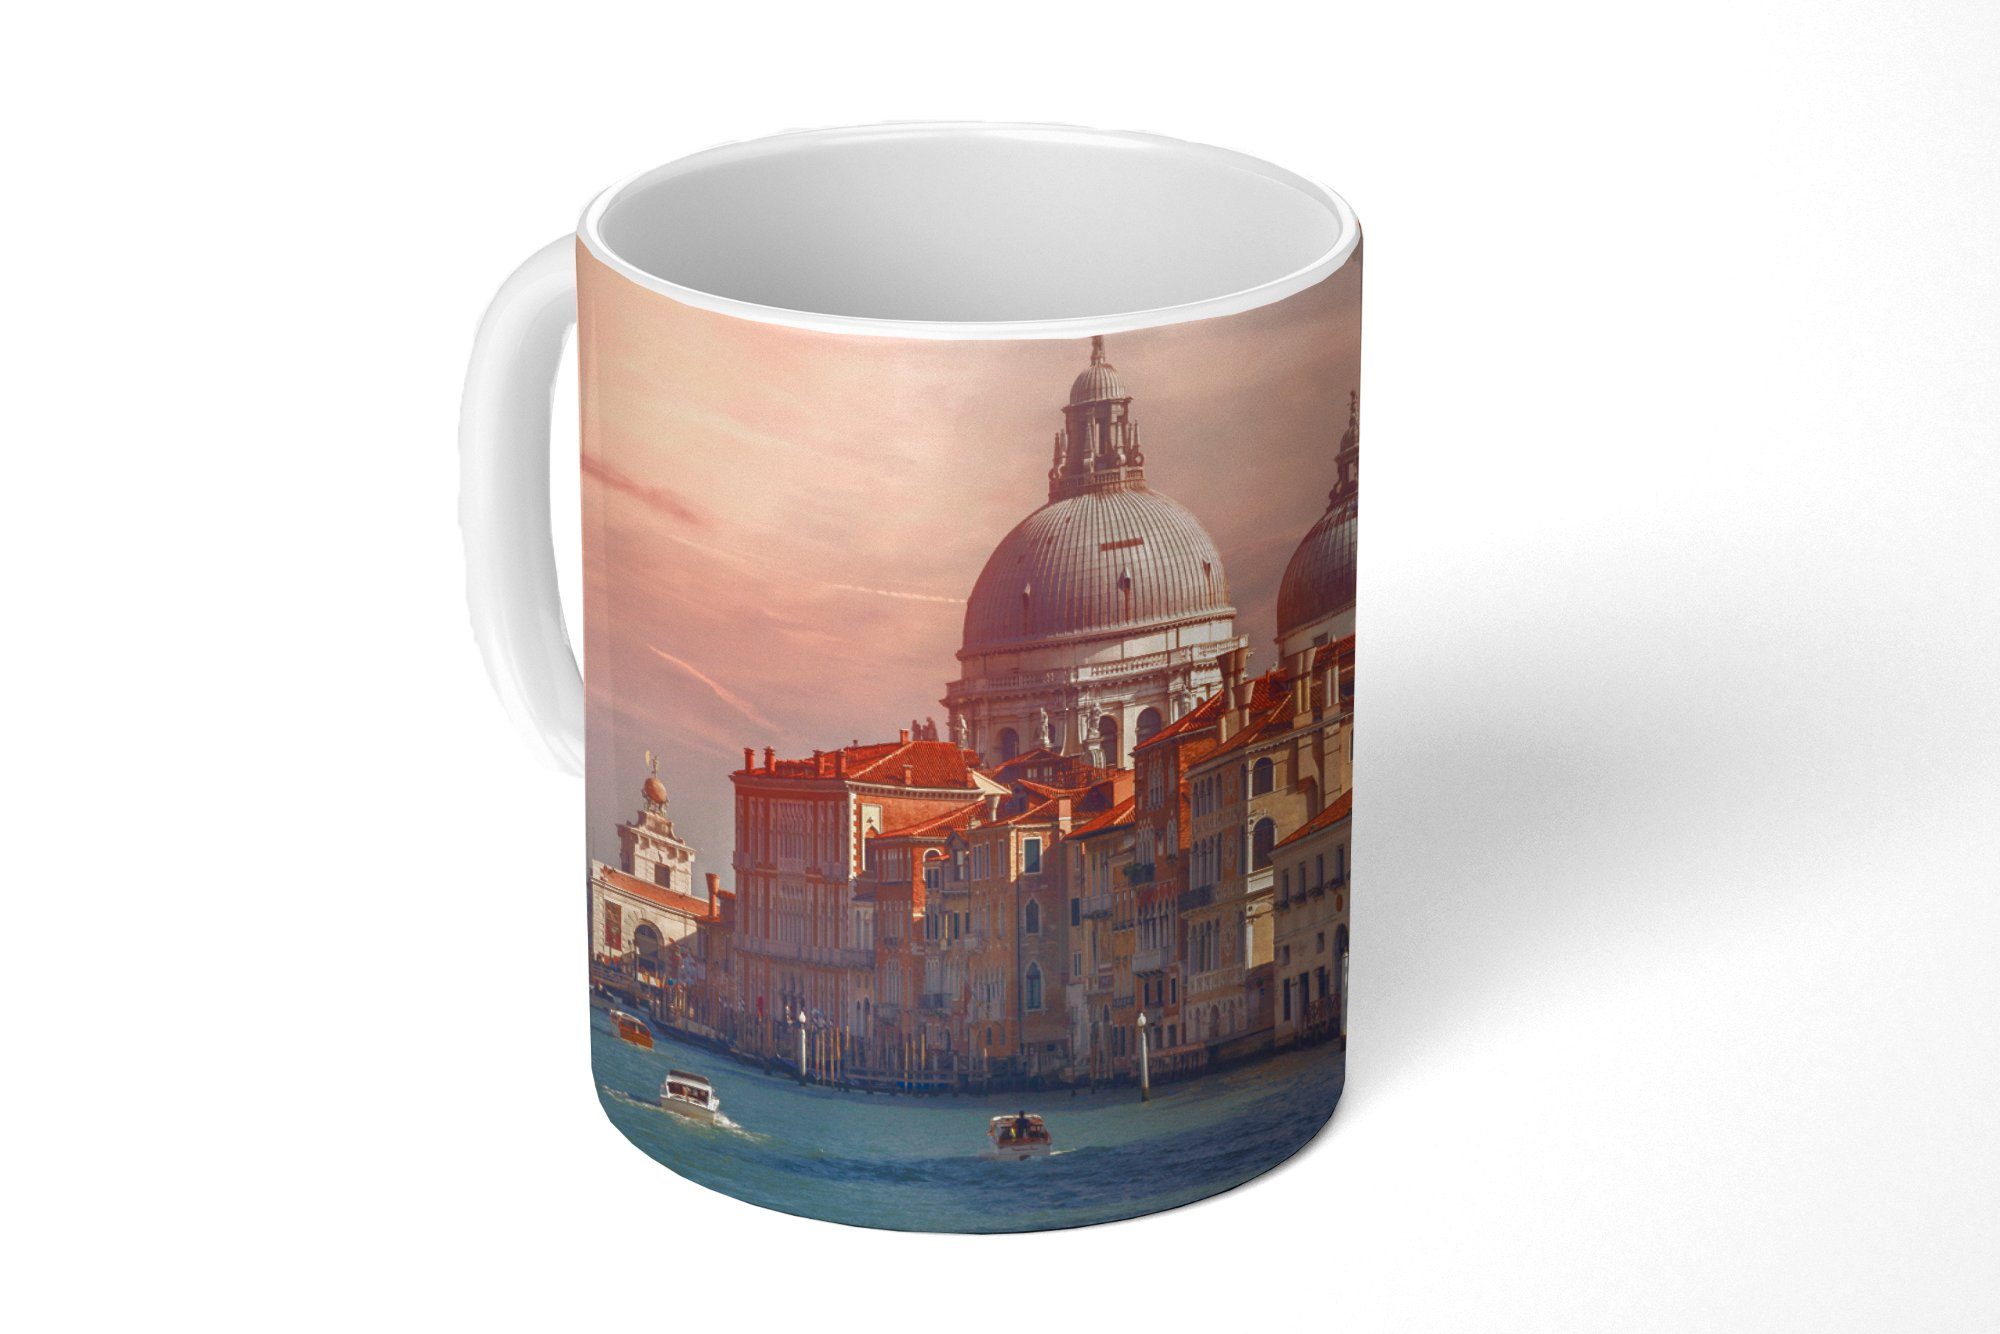 Grande, MuchoWow Kaffeetassen, Keramik, Becher, Teetasse, - Tasse Geschenk Venedig Canal - Teetasse, Italien